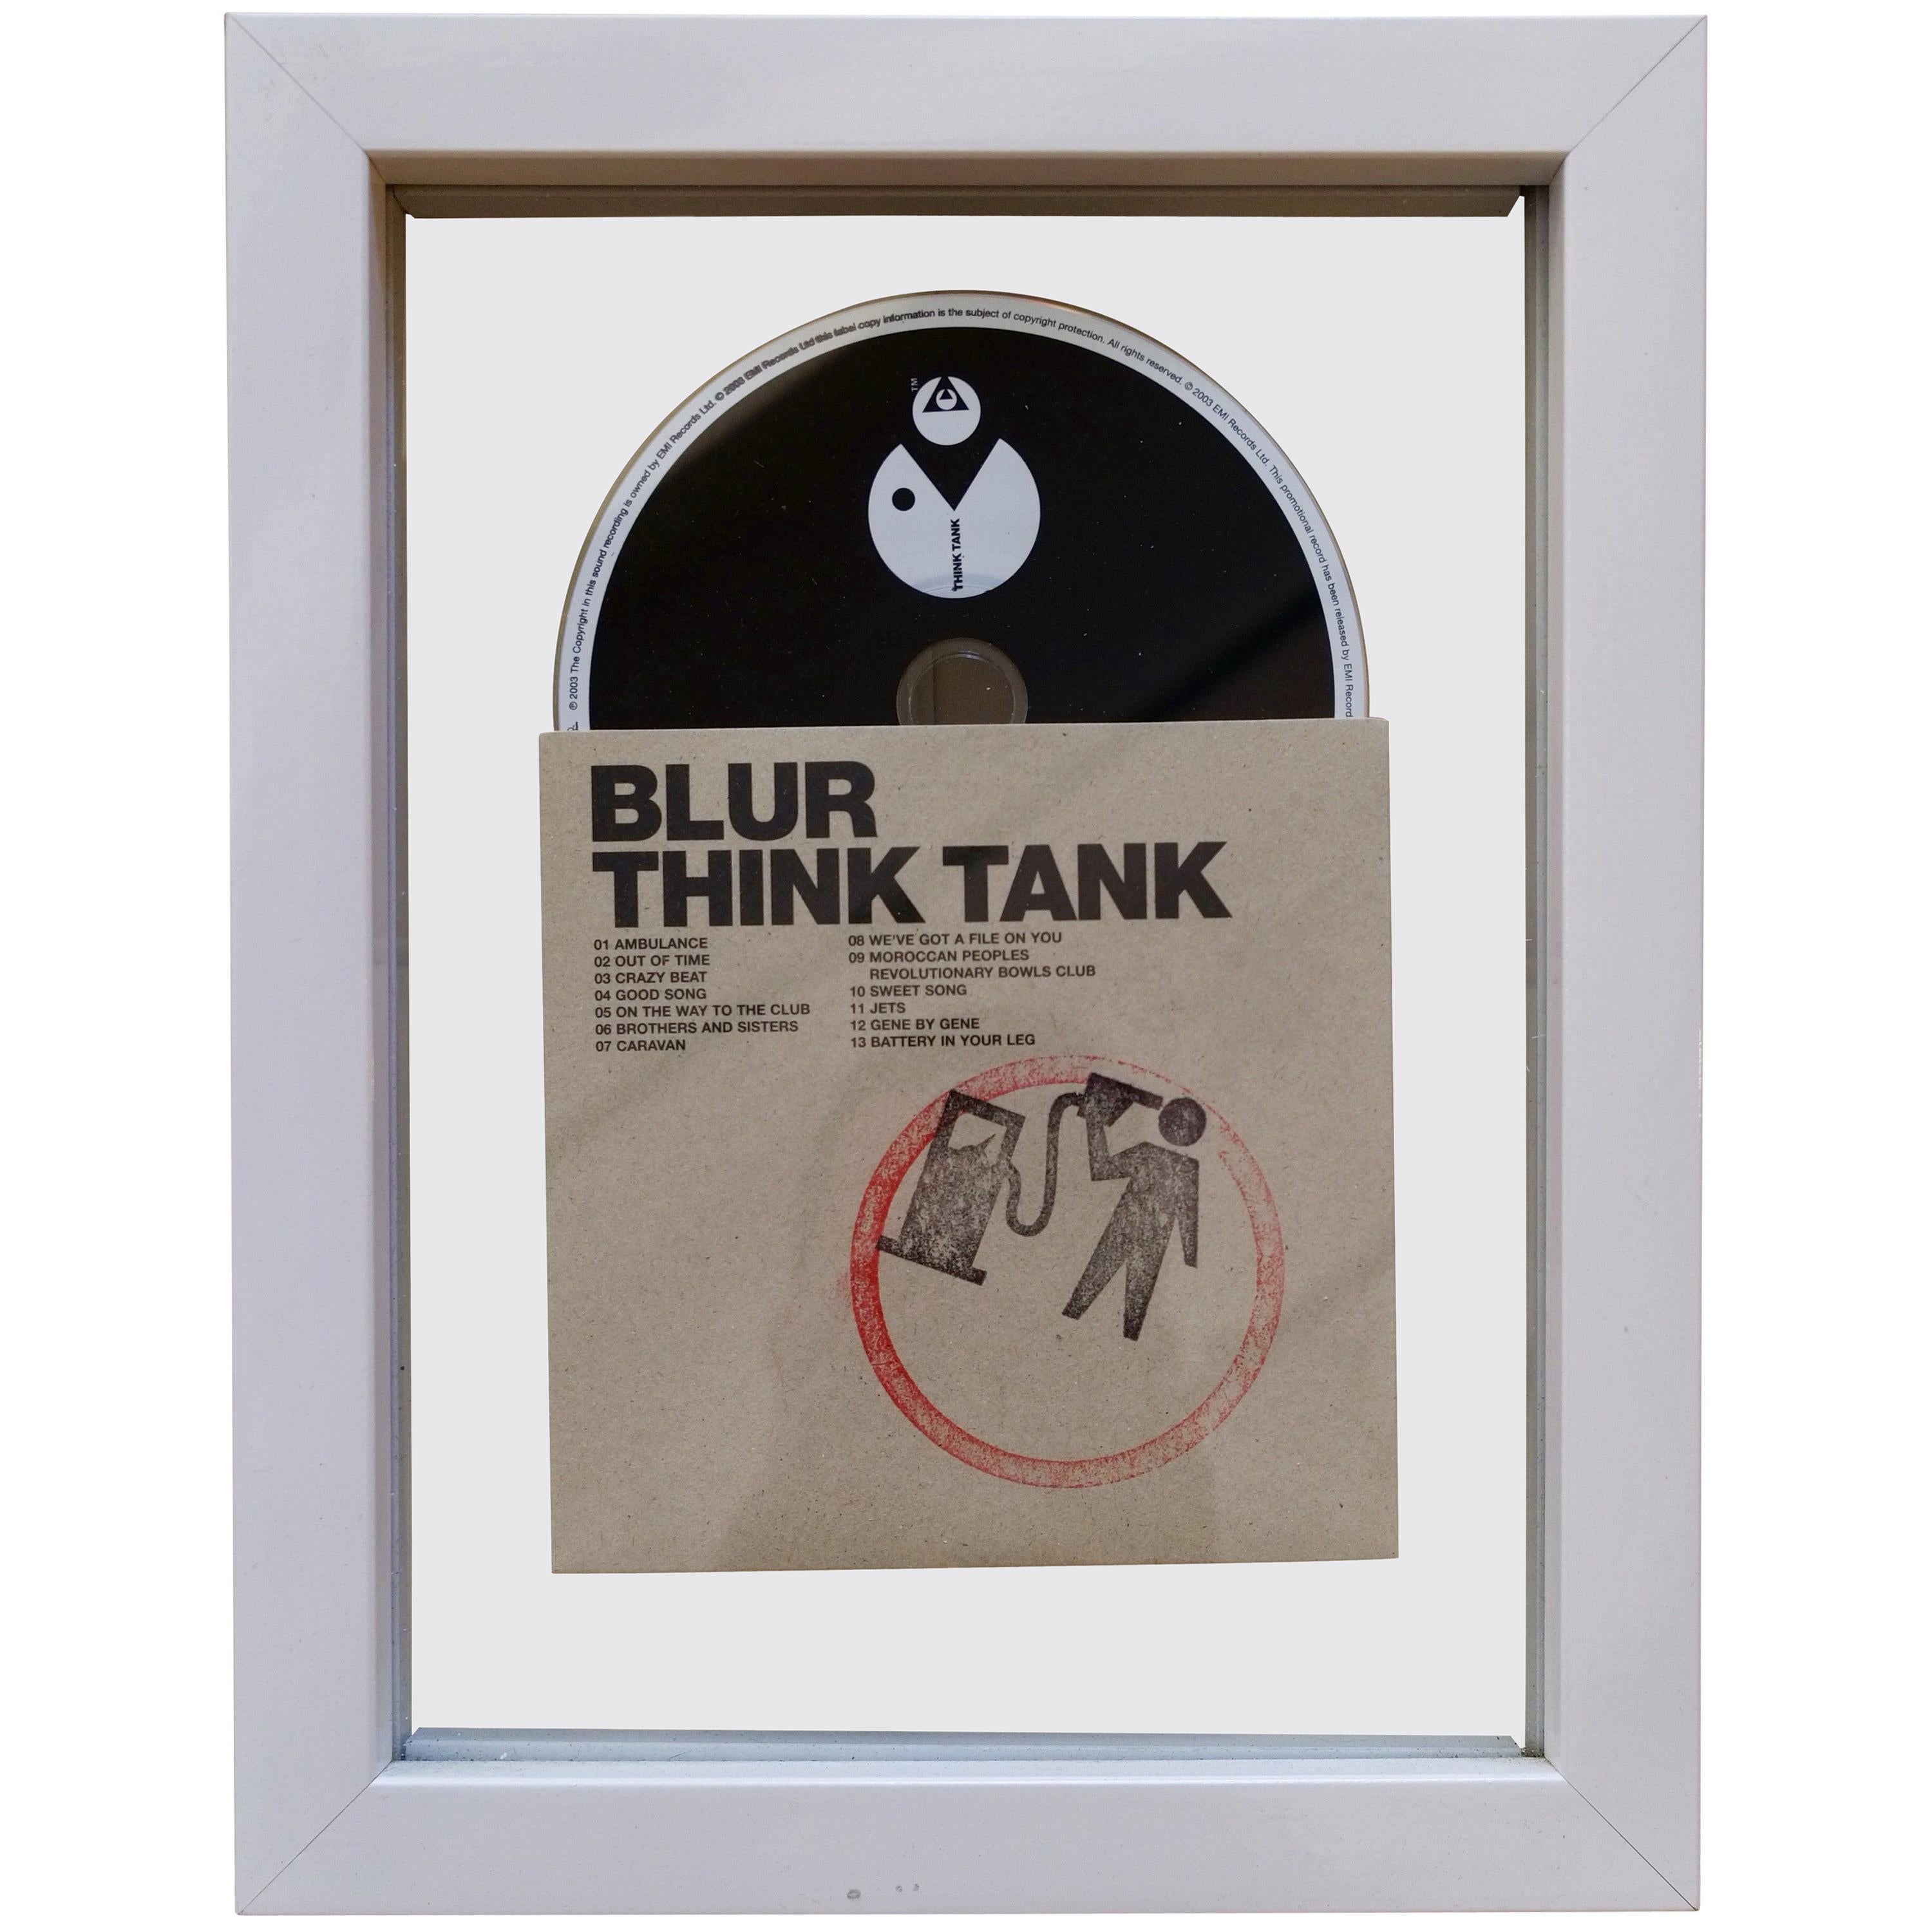 Blur Think Tank - Banksy - EMI Records 2003, Framed For Sale